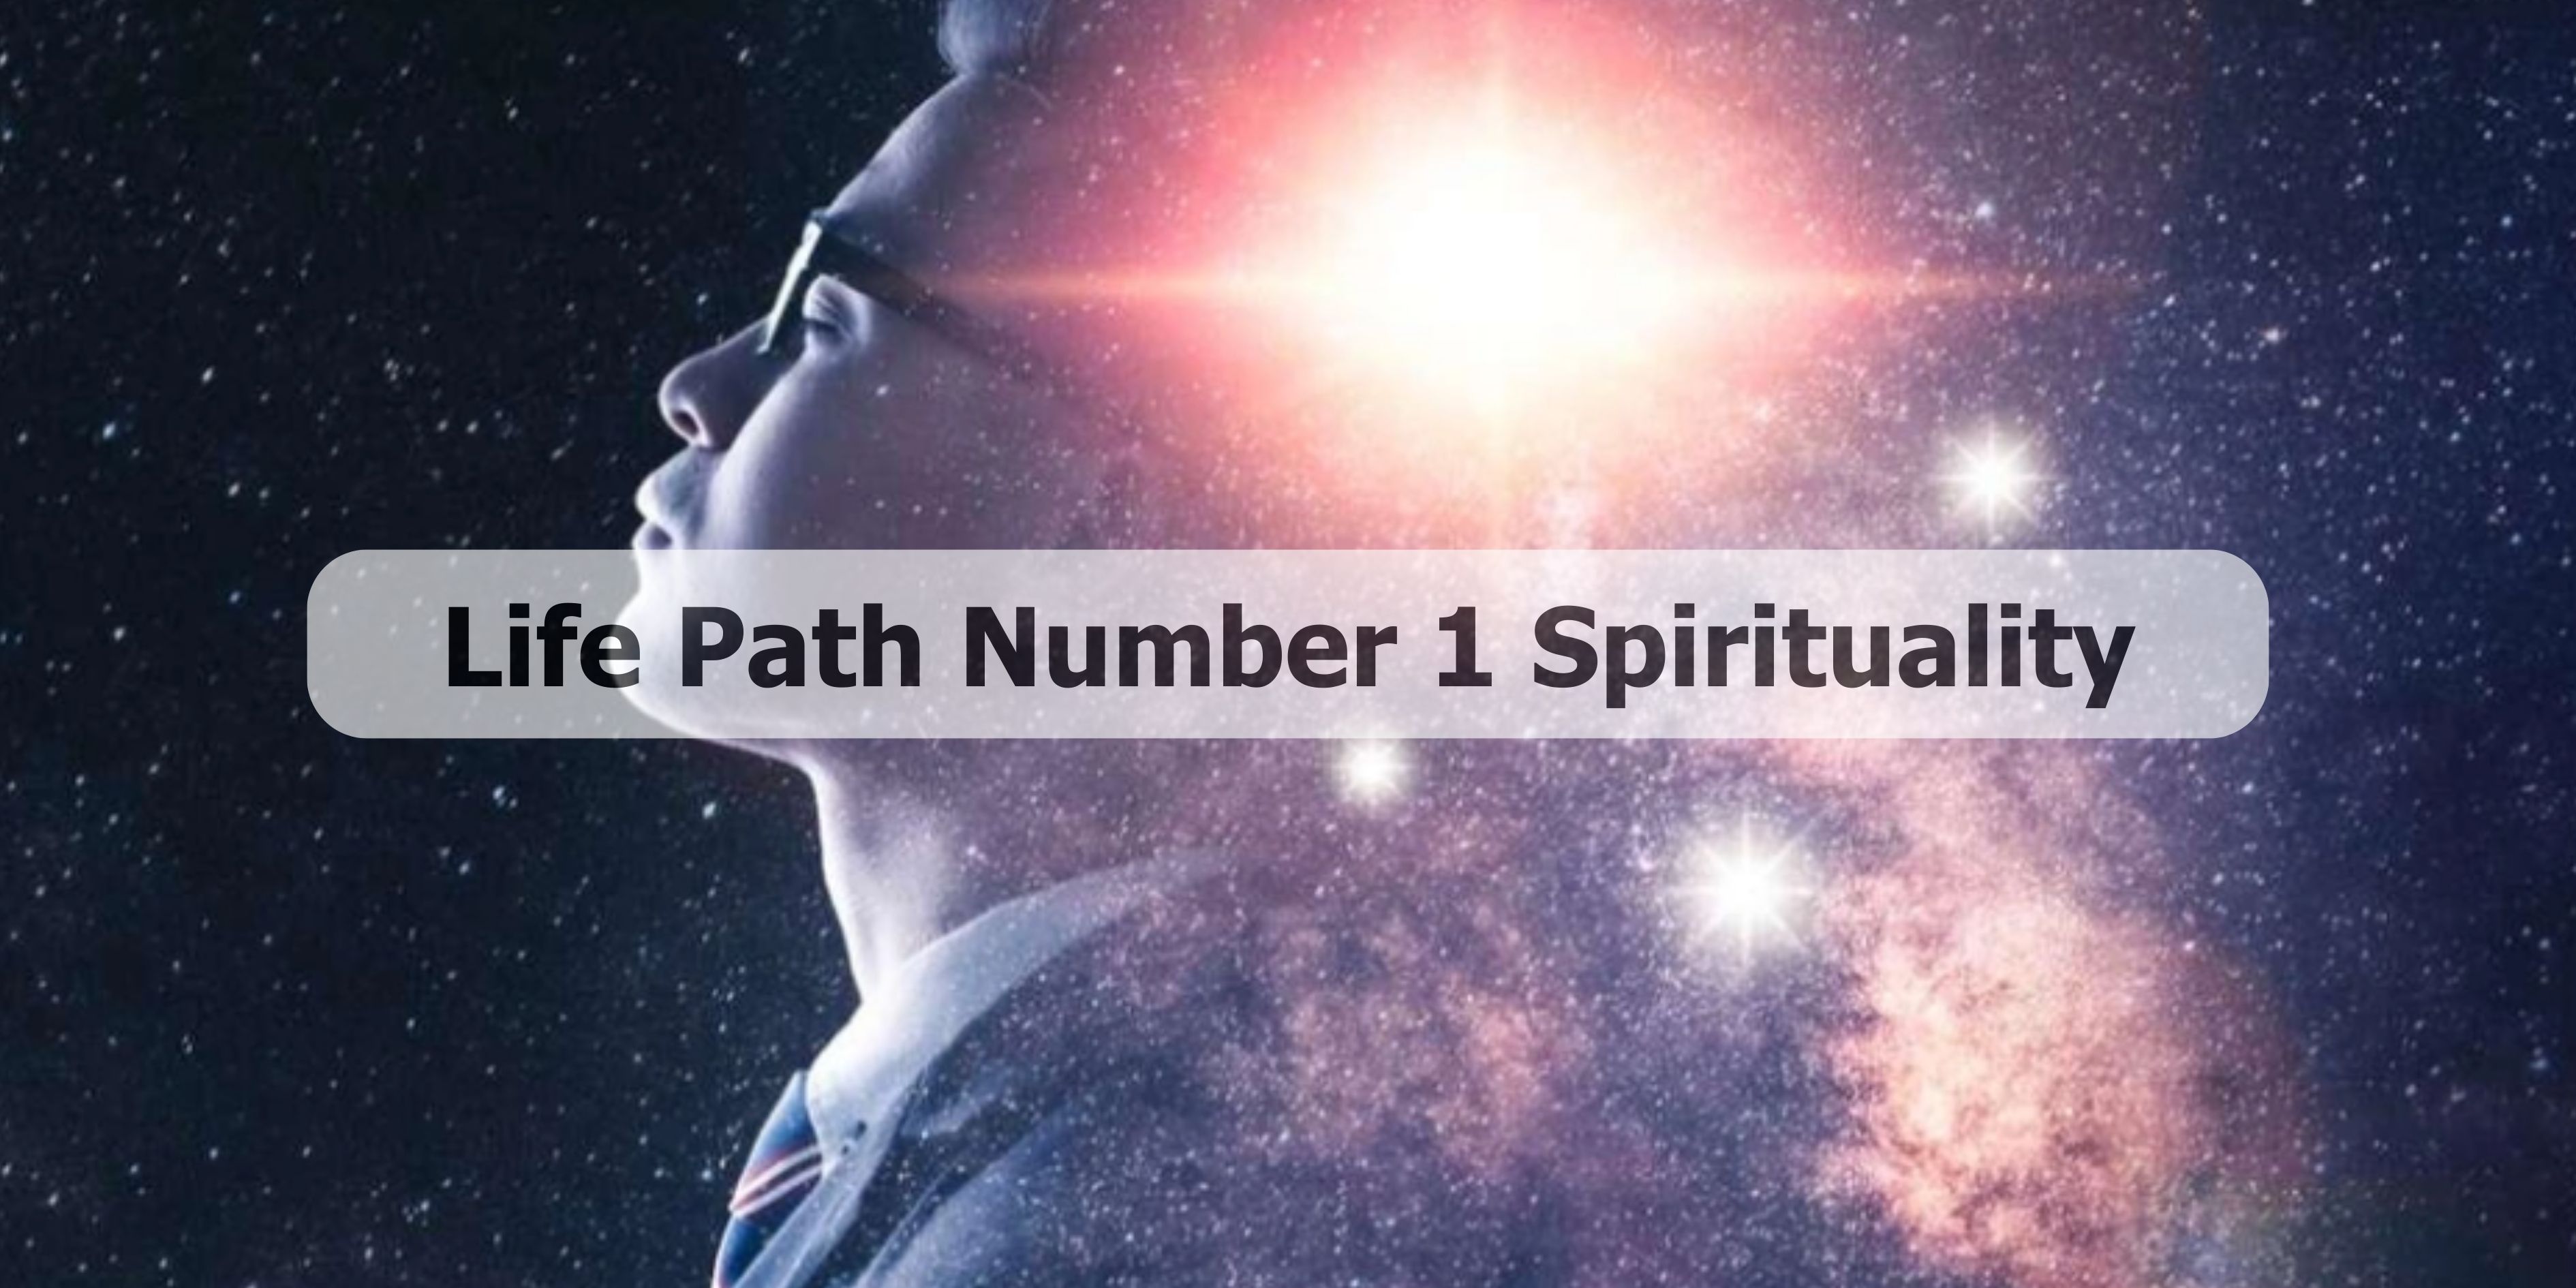 Life Path Number 1 Spirituality